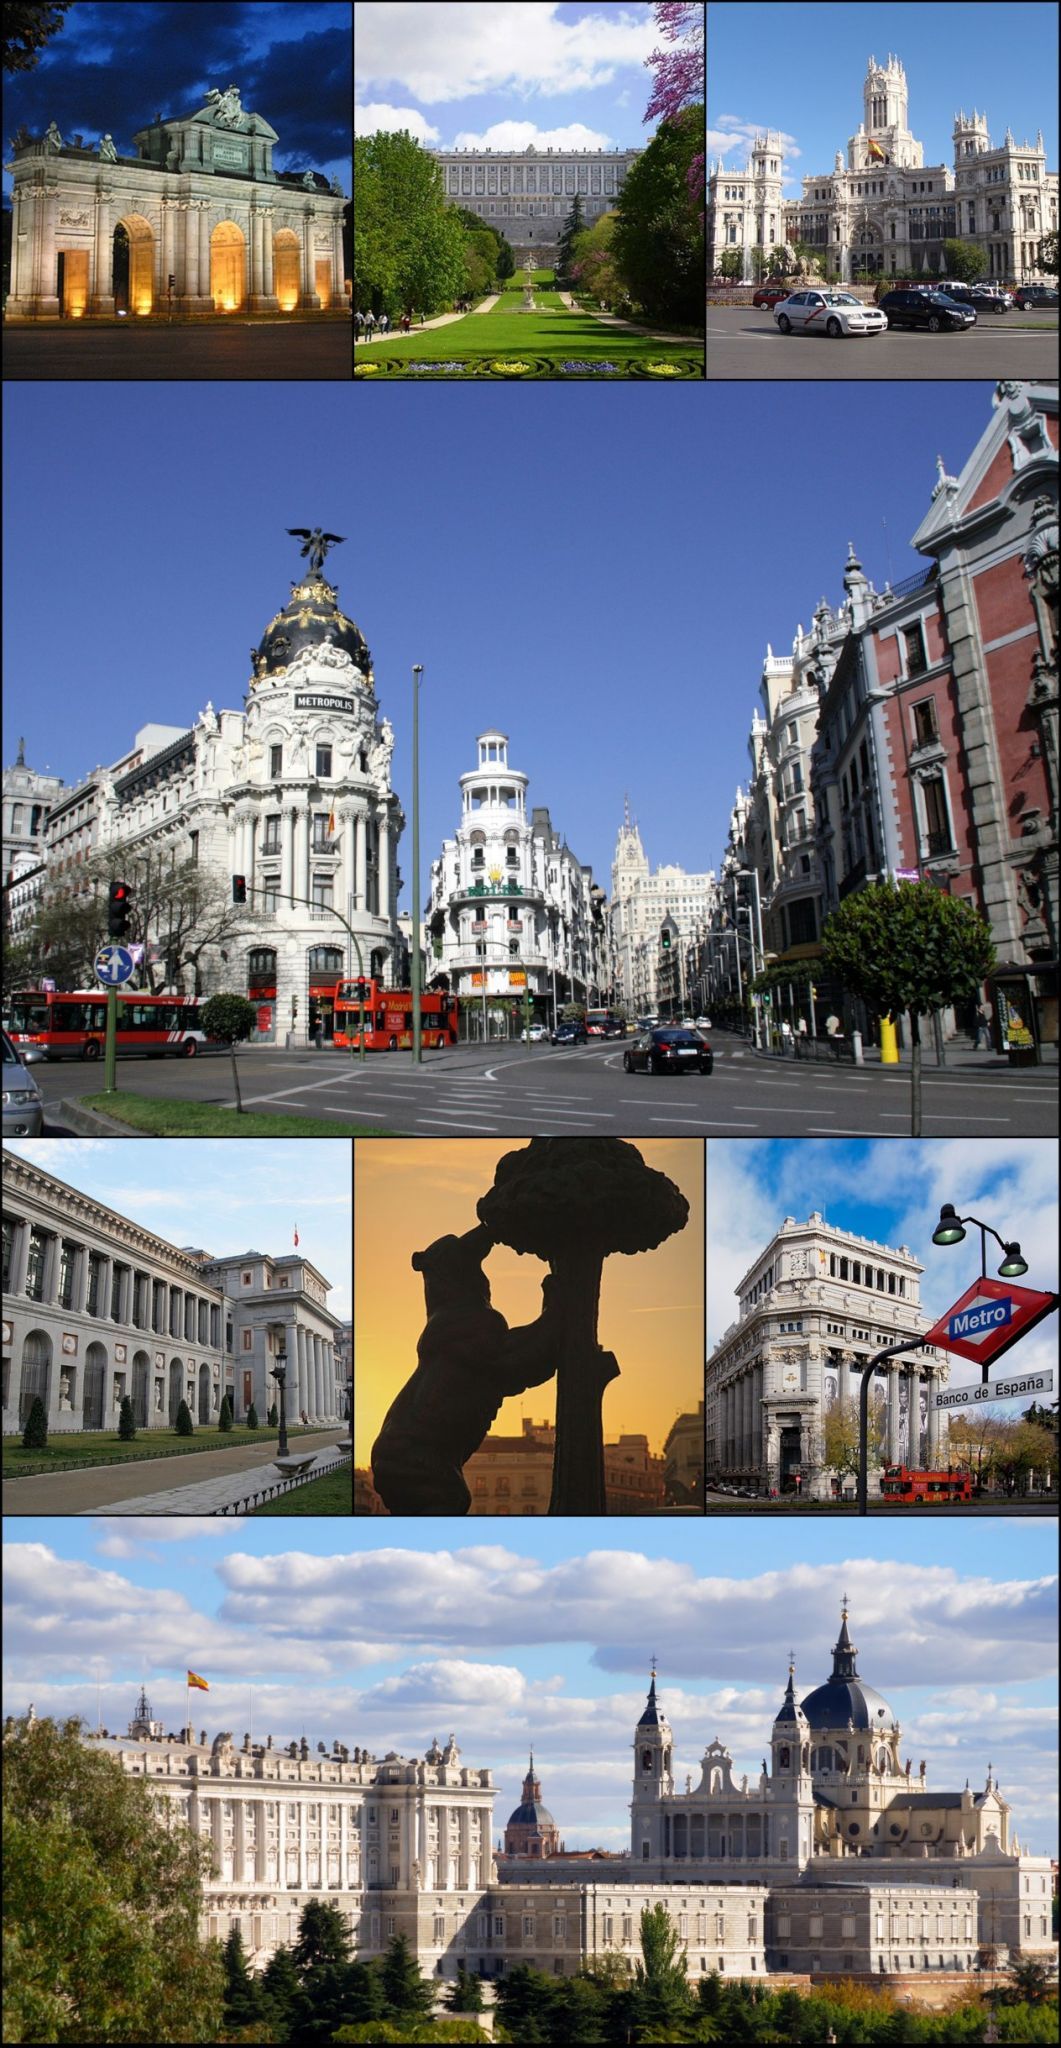 https://www.net4info.de/photos/cpg/albums/userpics/10001/Madrid.jpg